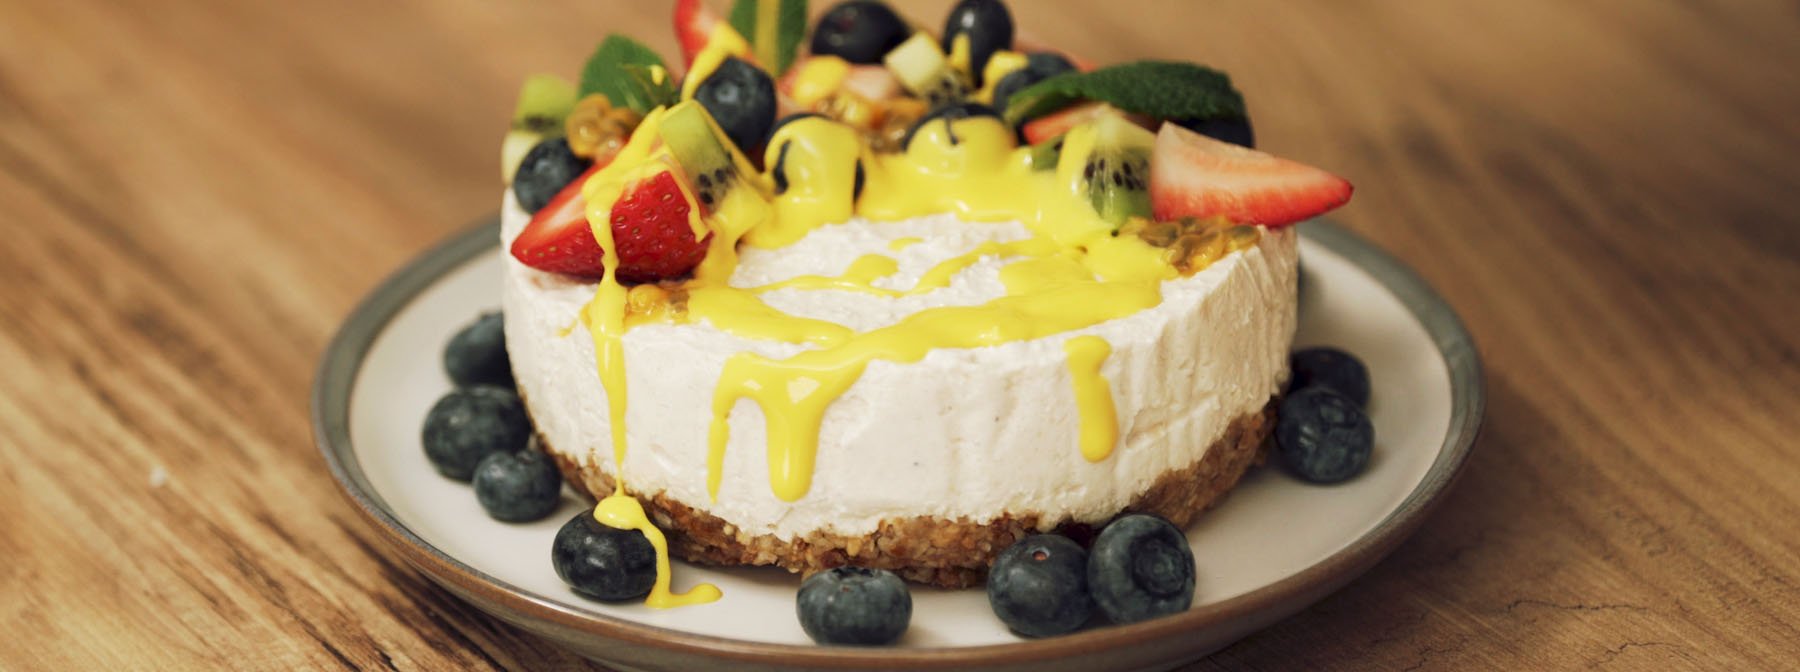 Recette Cheesecake Vegan | Source fruitée d’Omega 3